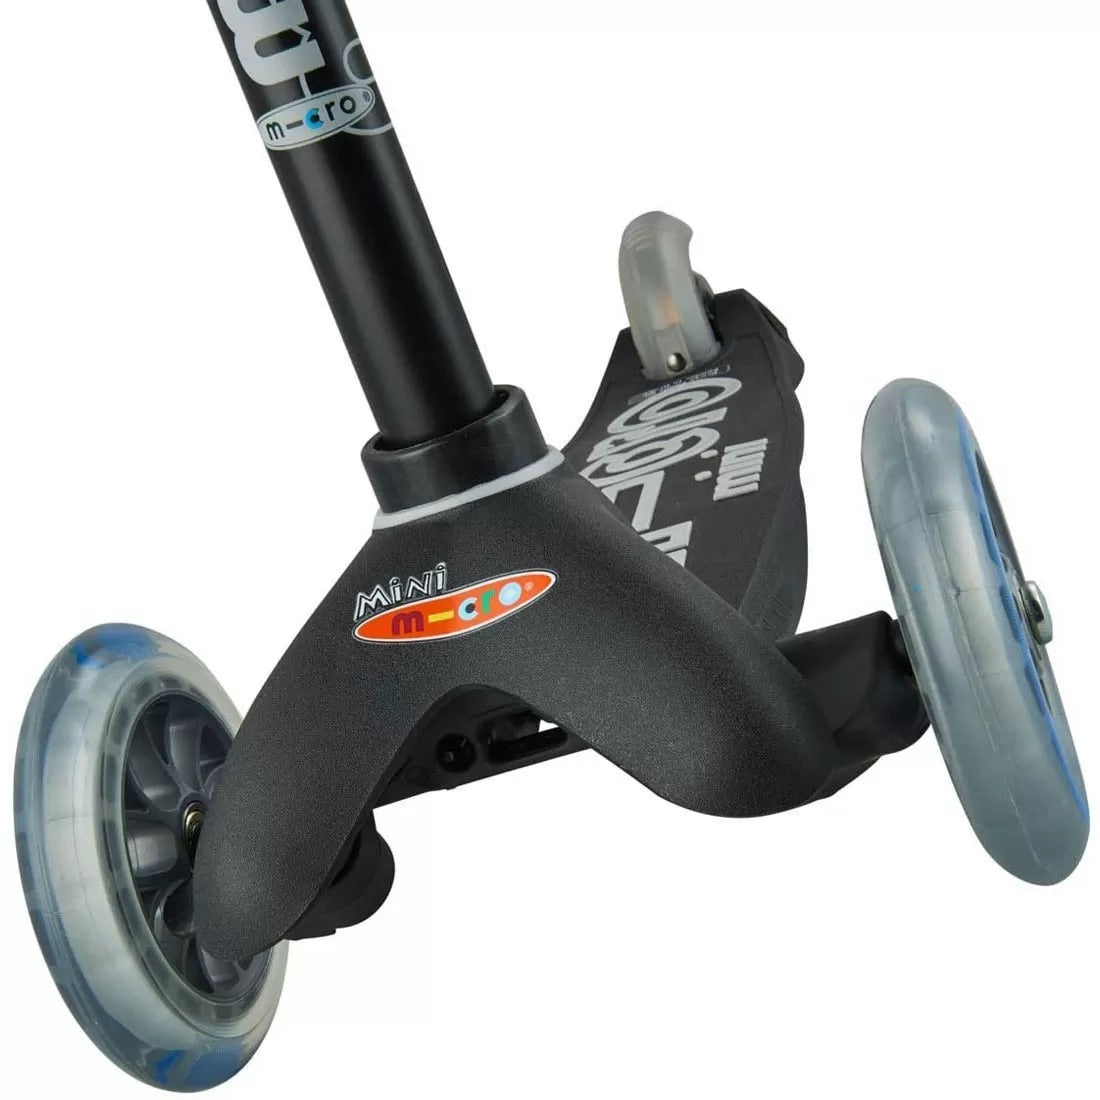 Micro Scooter Mini Deluxe Tilt and Turn Lightweight Kick